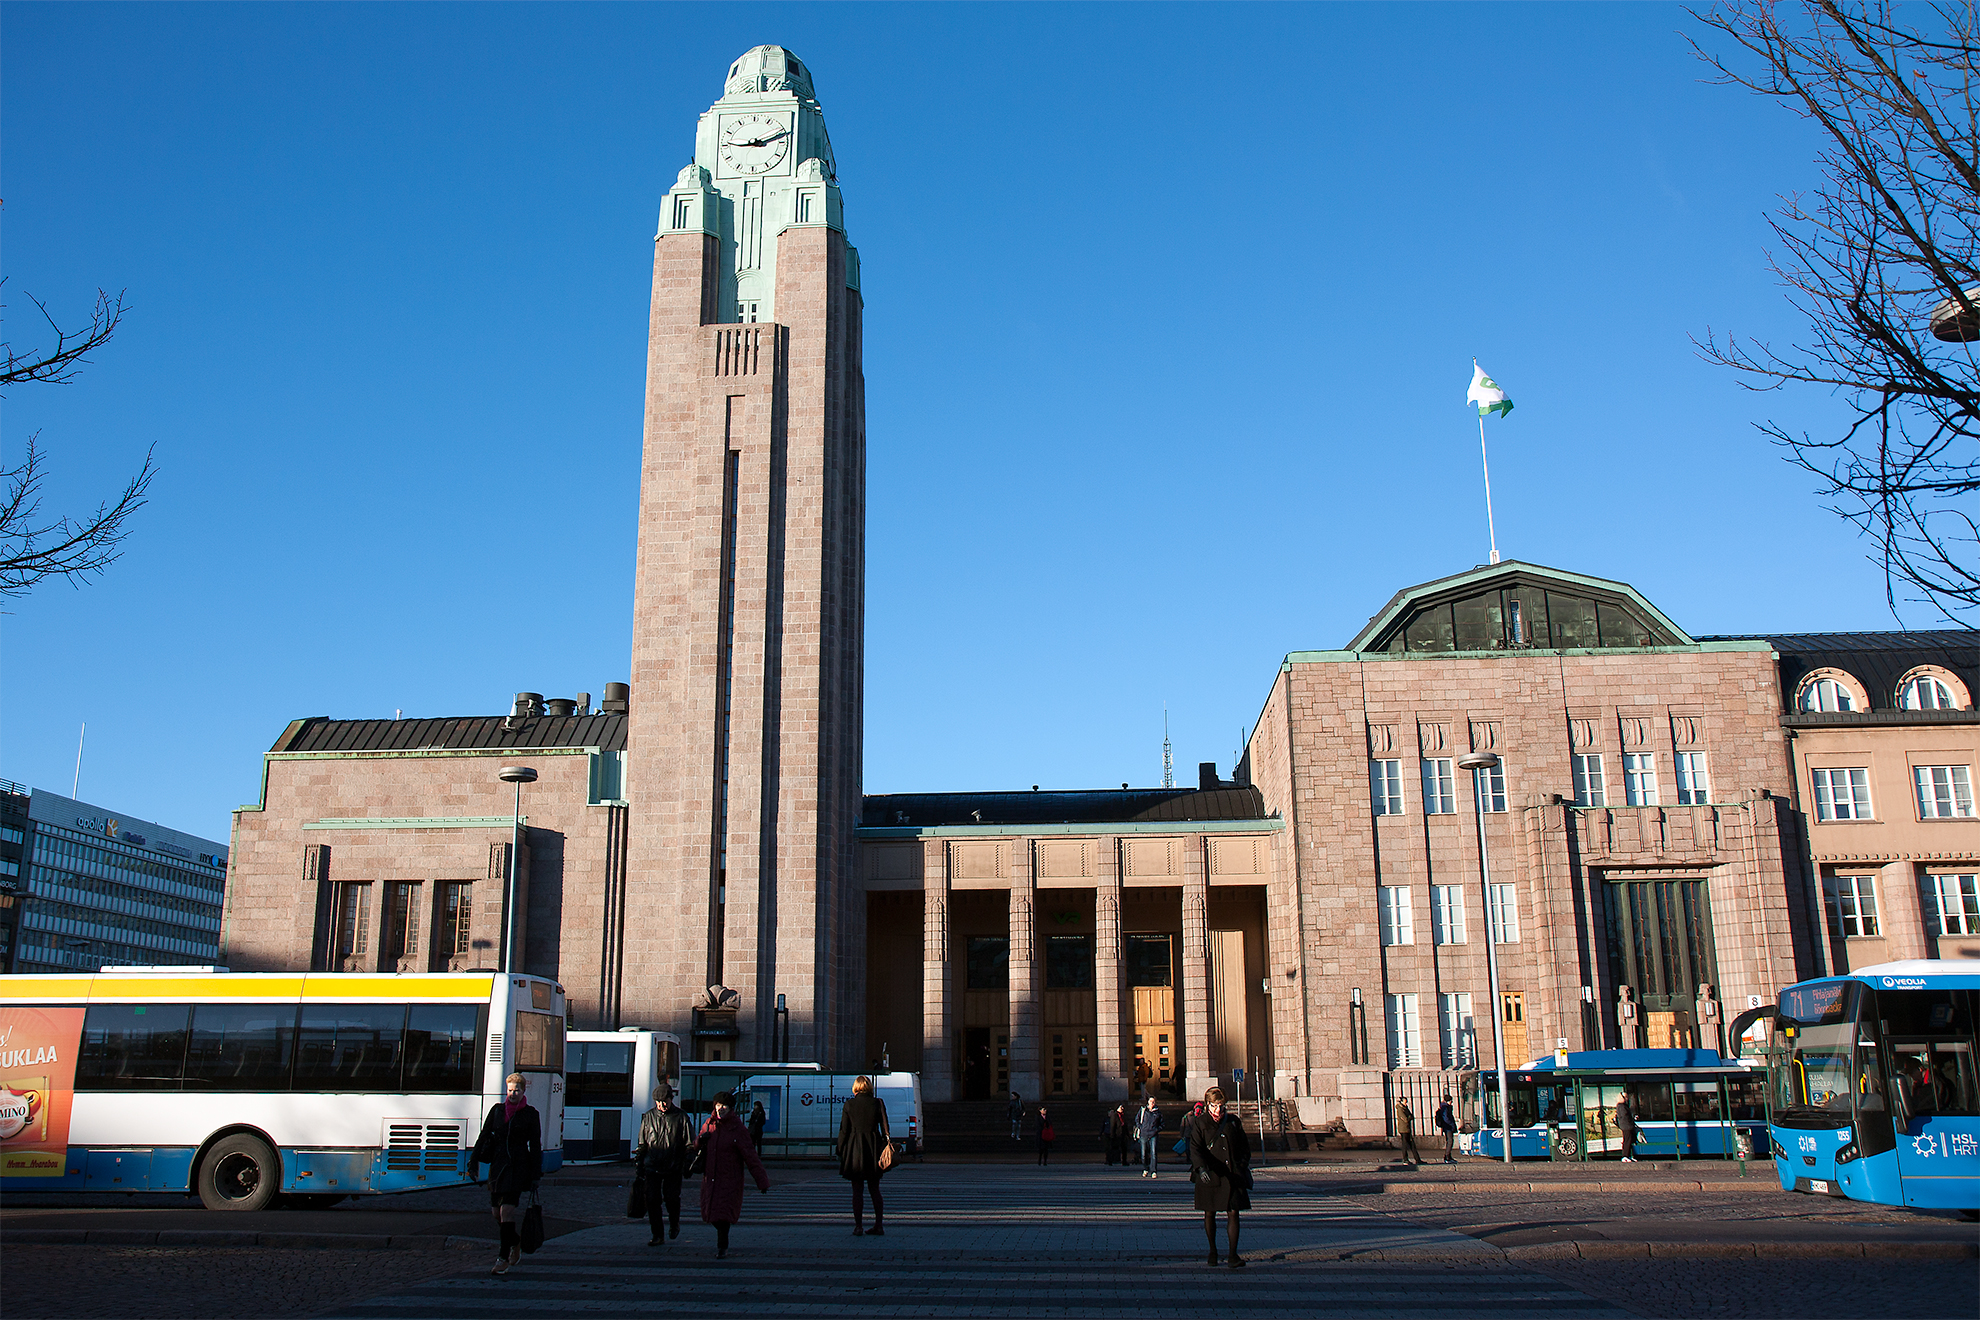 Helsinki train station